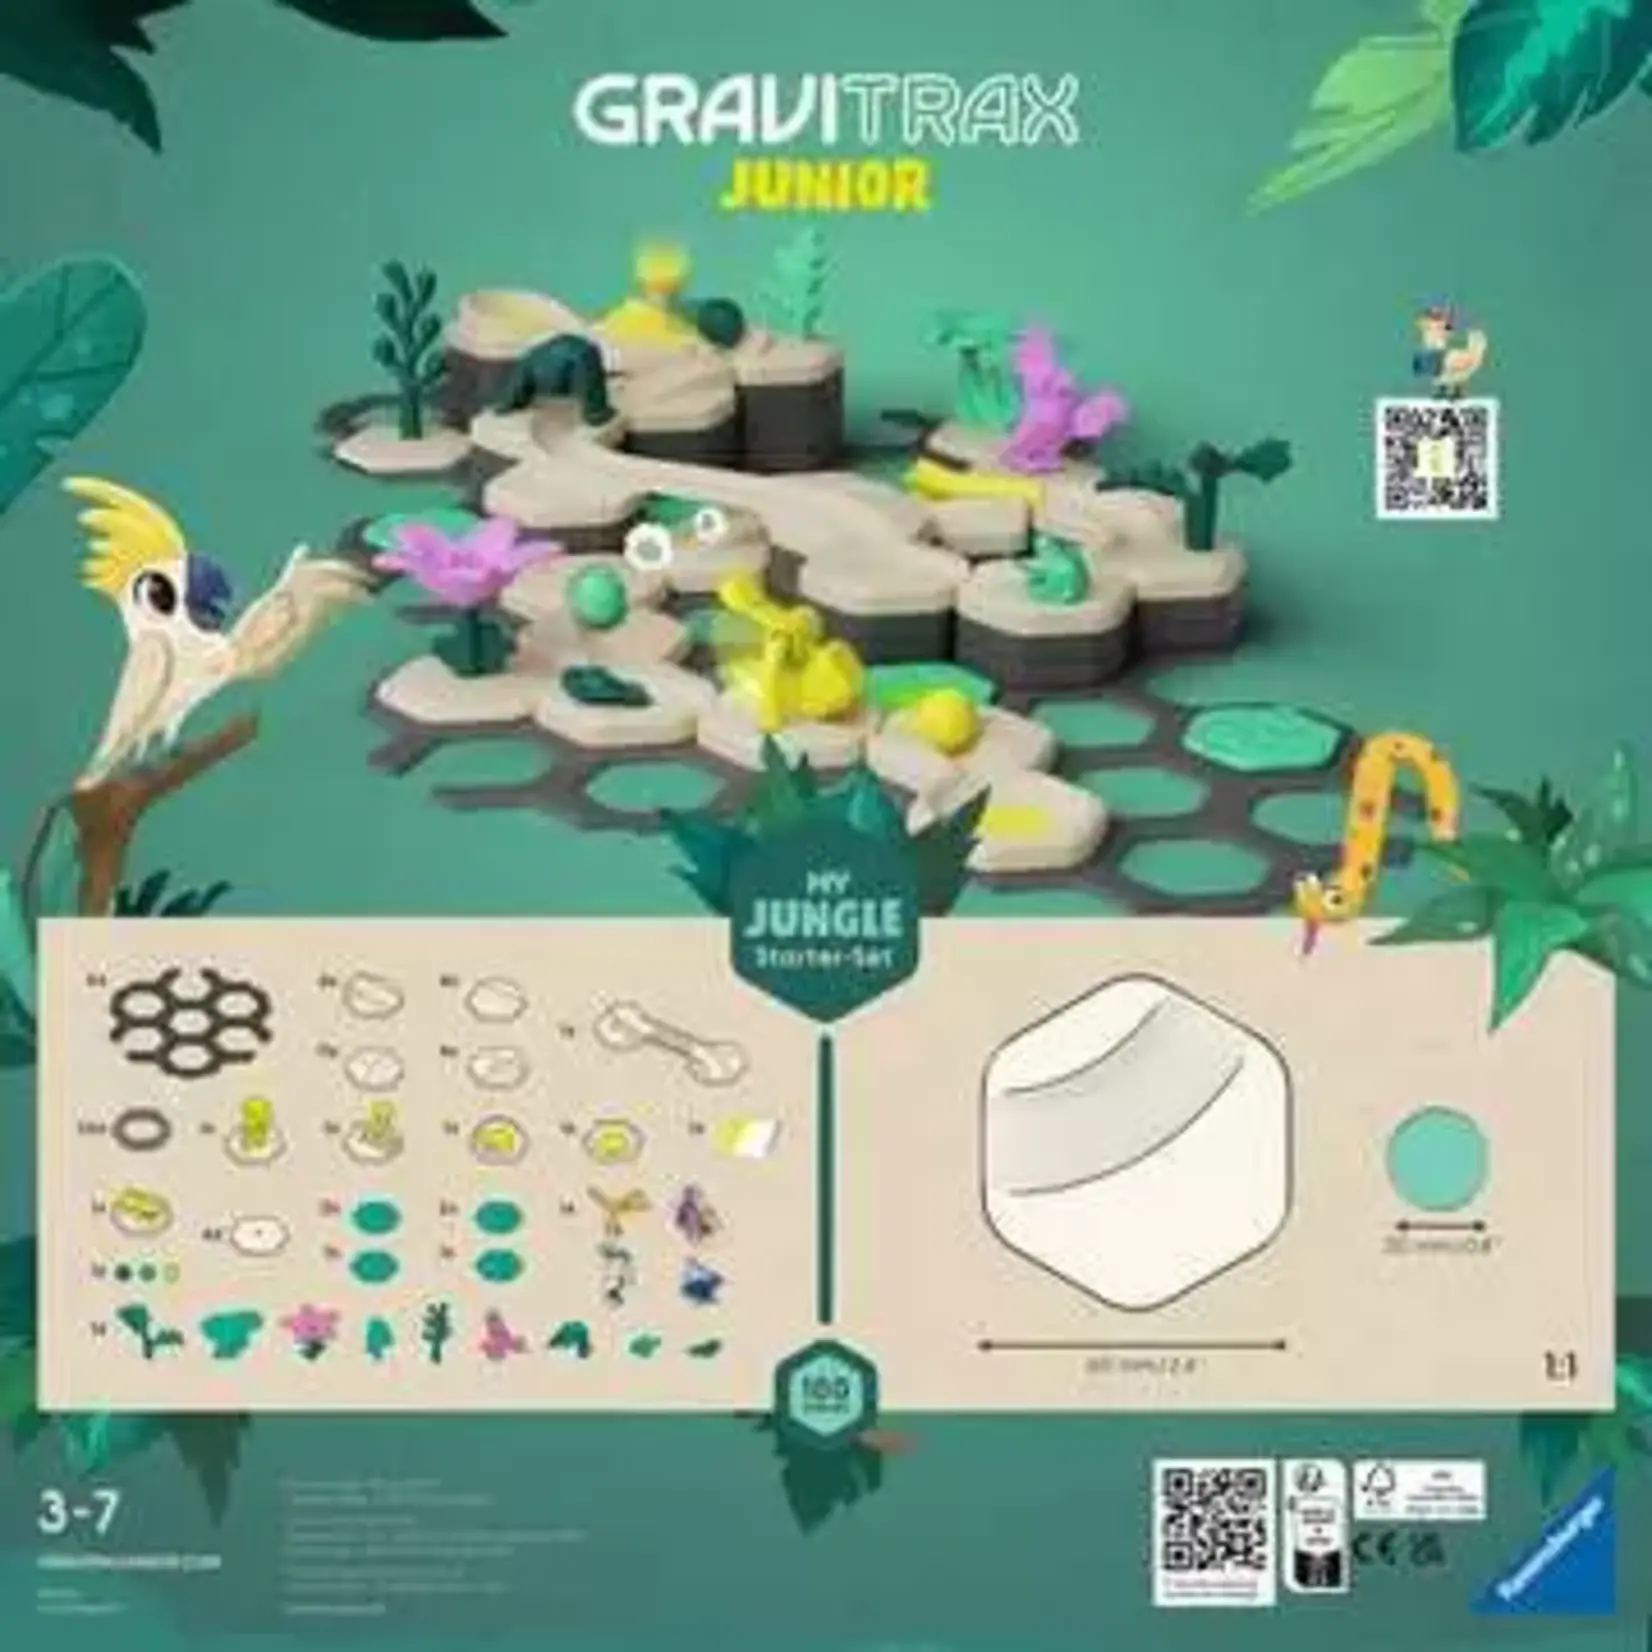 GraviTrax Junior Starter kit - Toy Joy